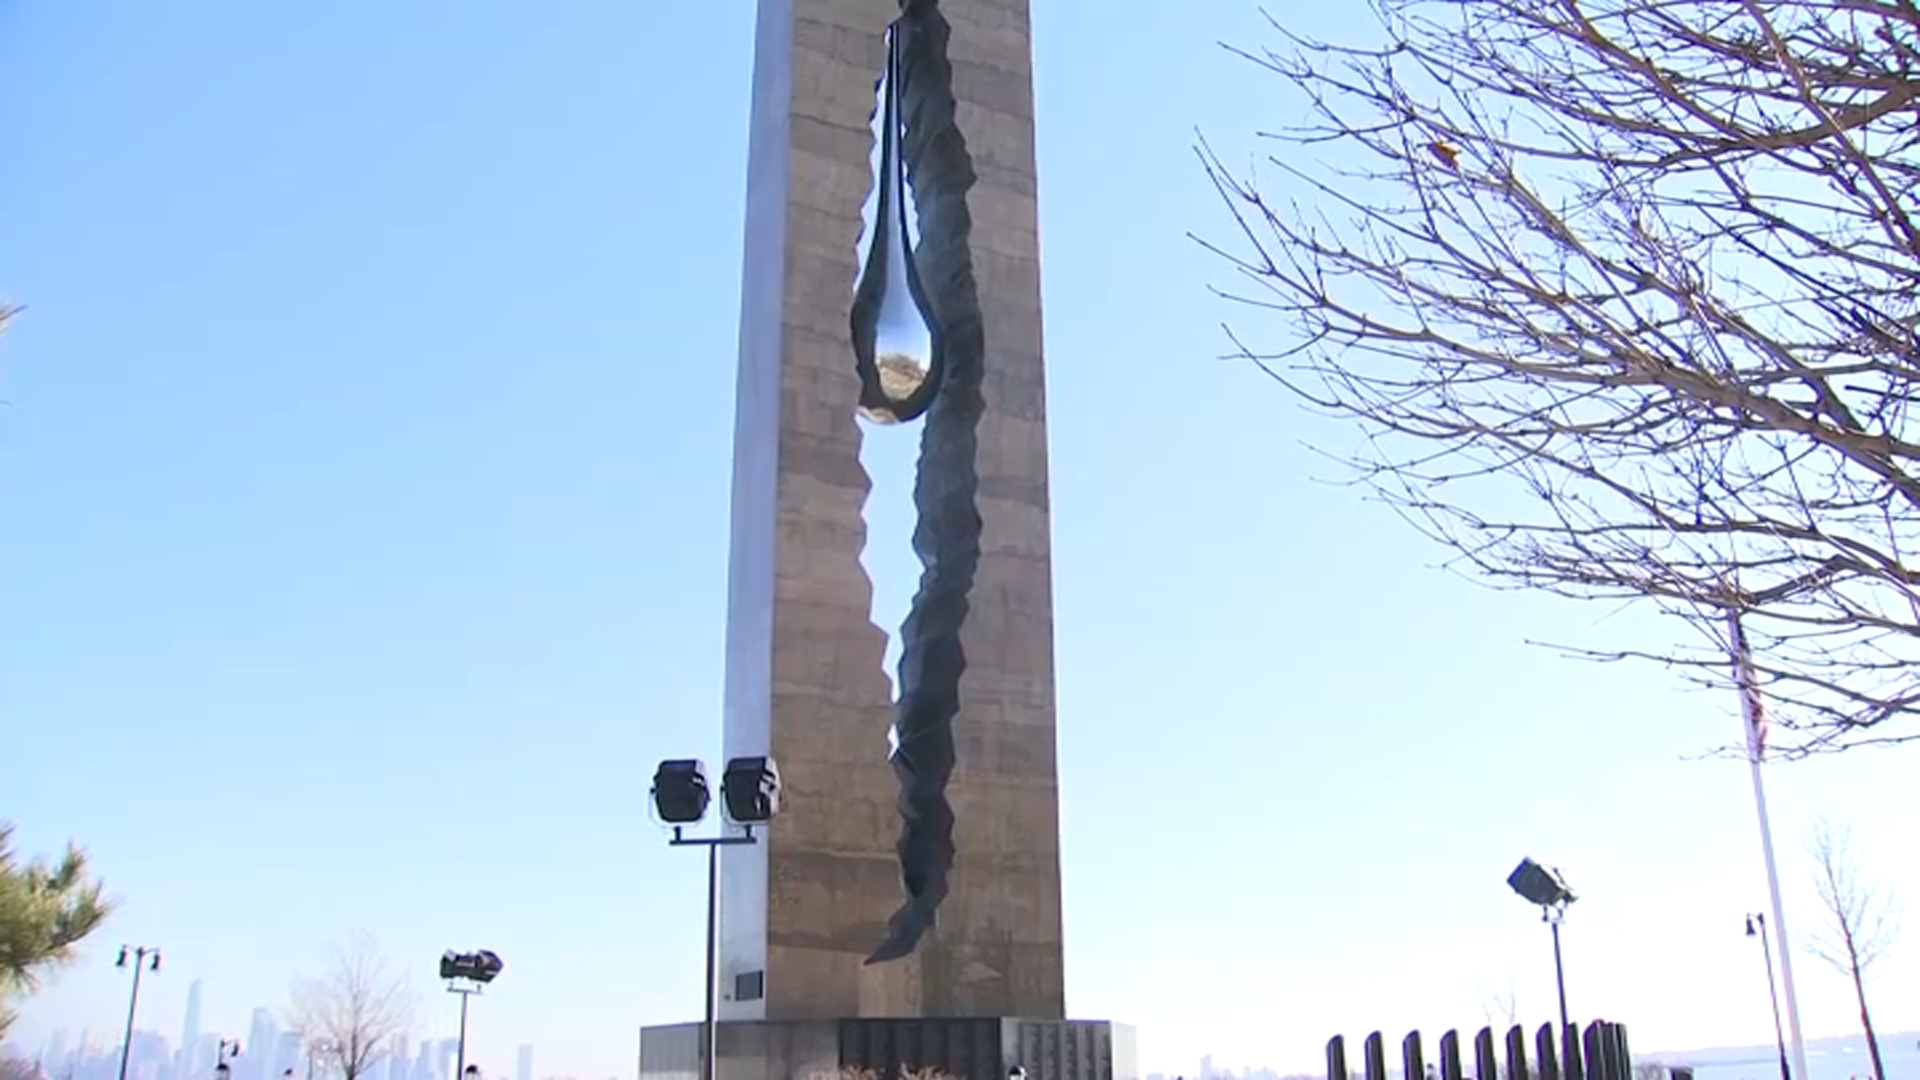 Desmañado Ennegrecer Subir Putin's Name Covered Up on 9/11 Memorial in New Jersey – NBC New York